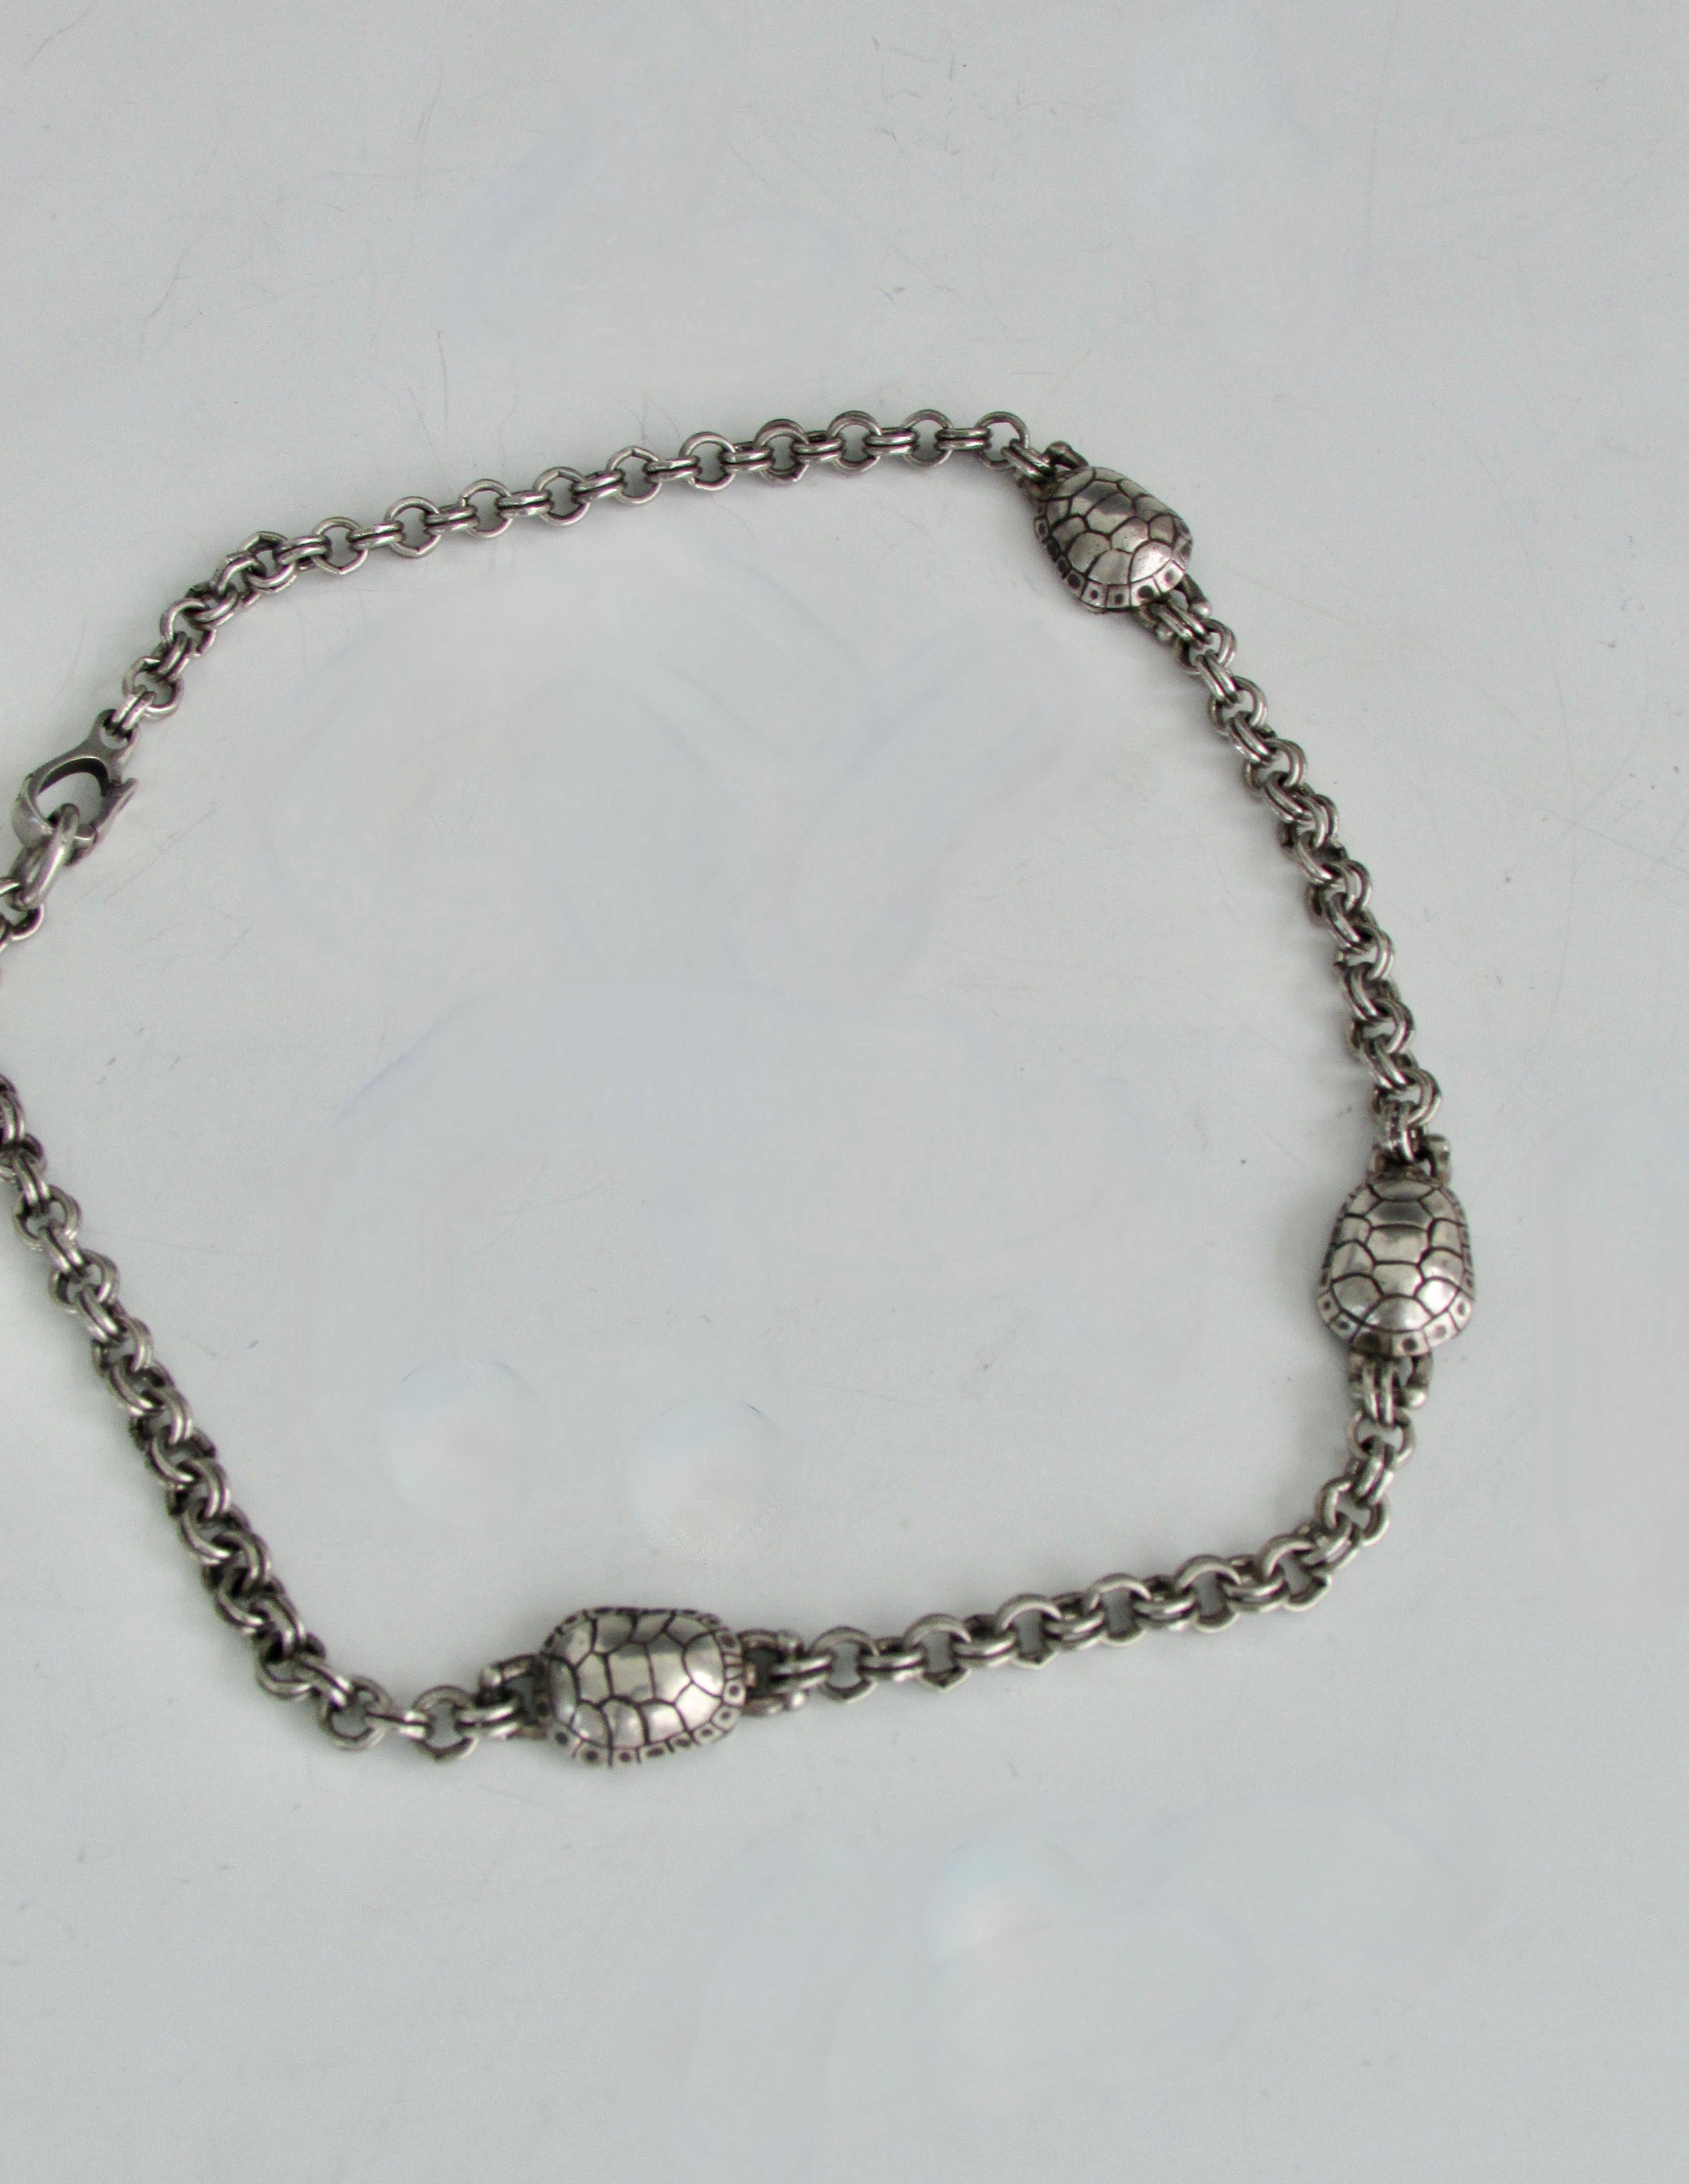 matteo sterling silver chain